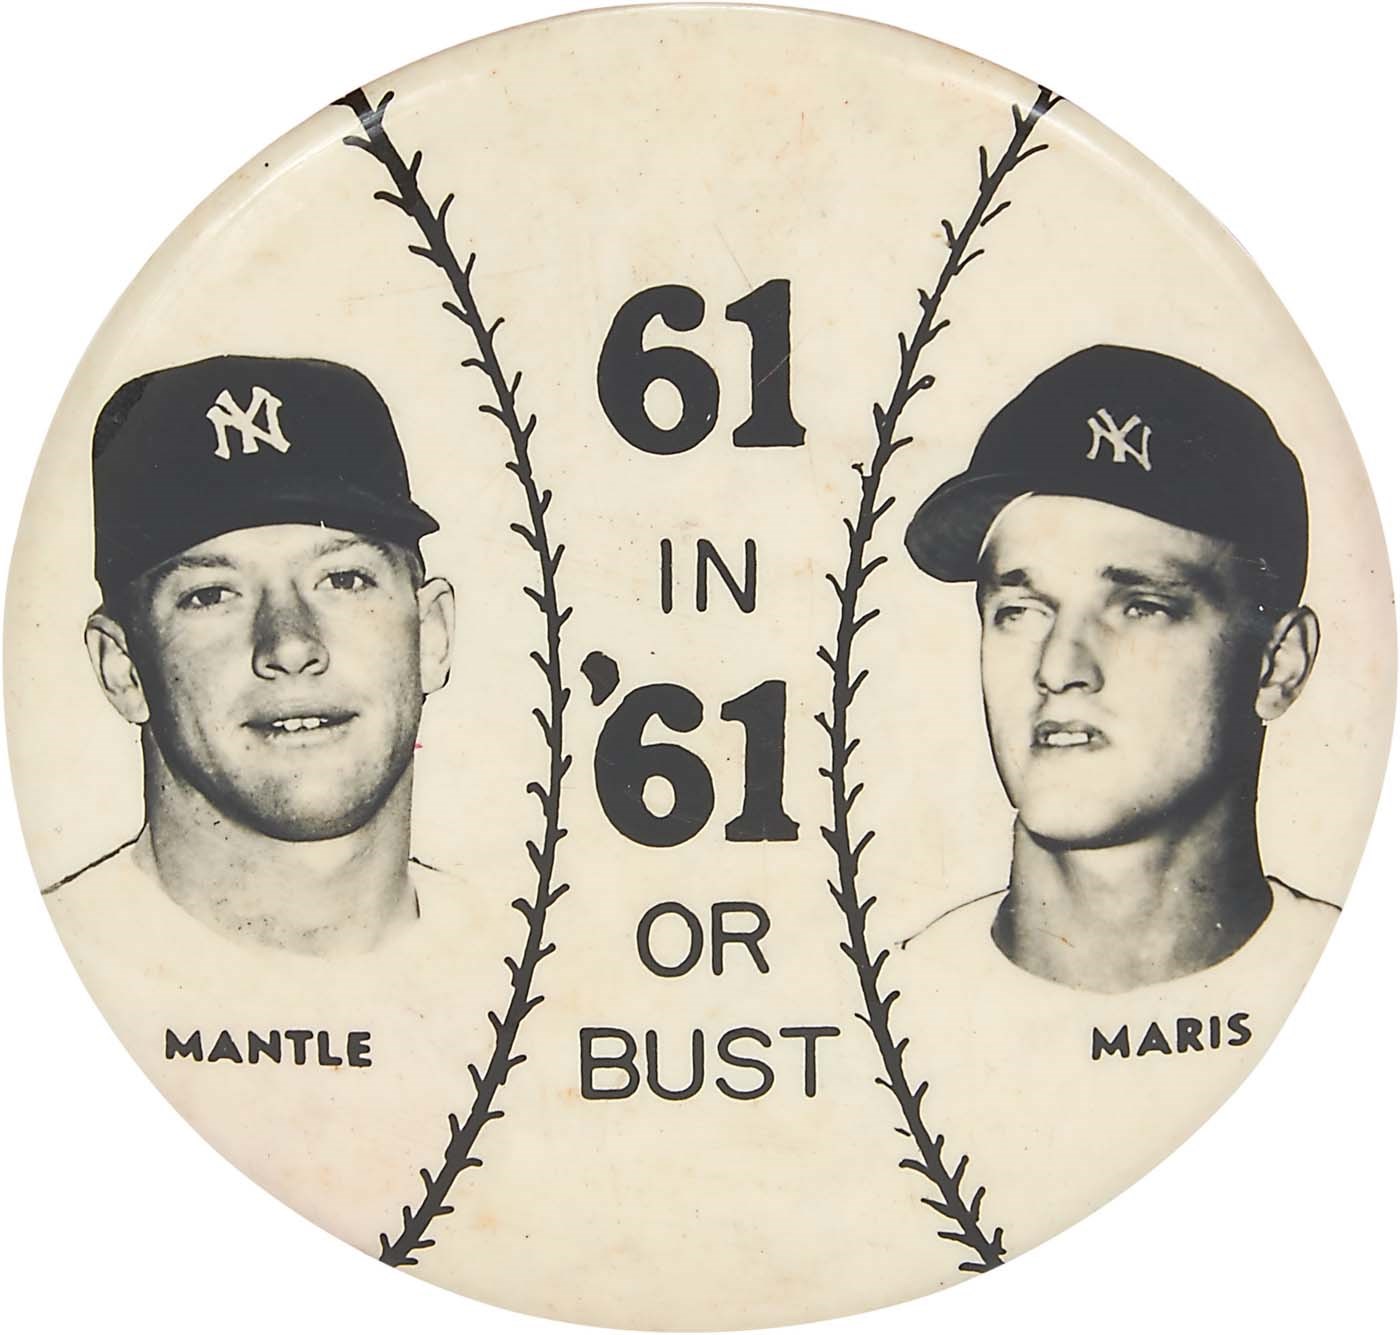 "61 in '61 or Bust" Mantle & Maris Jumbo Pin